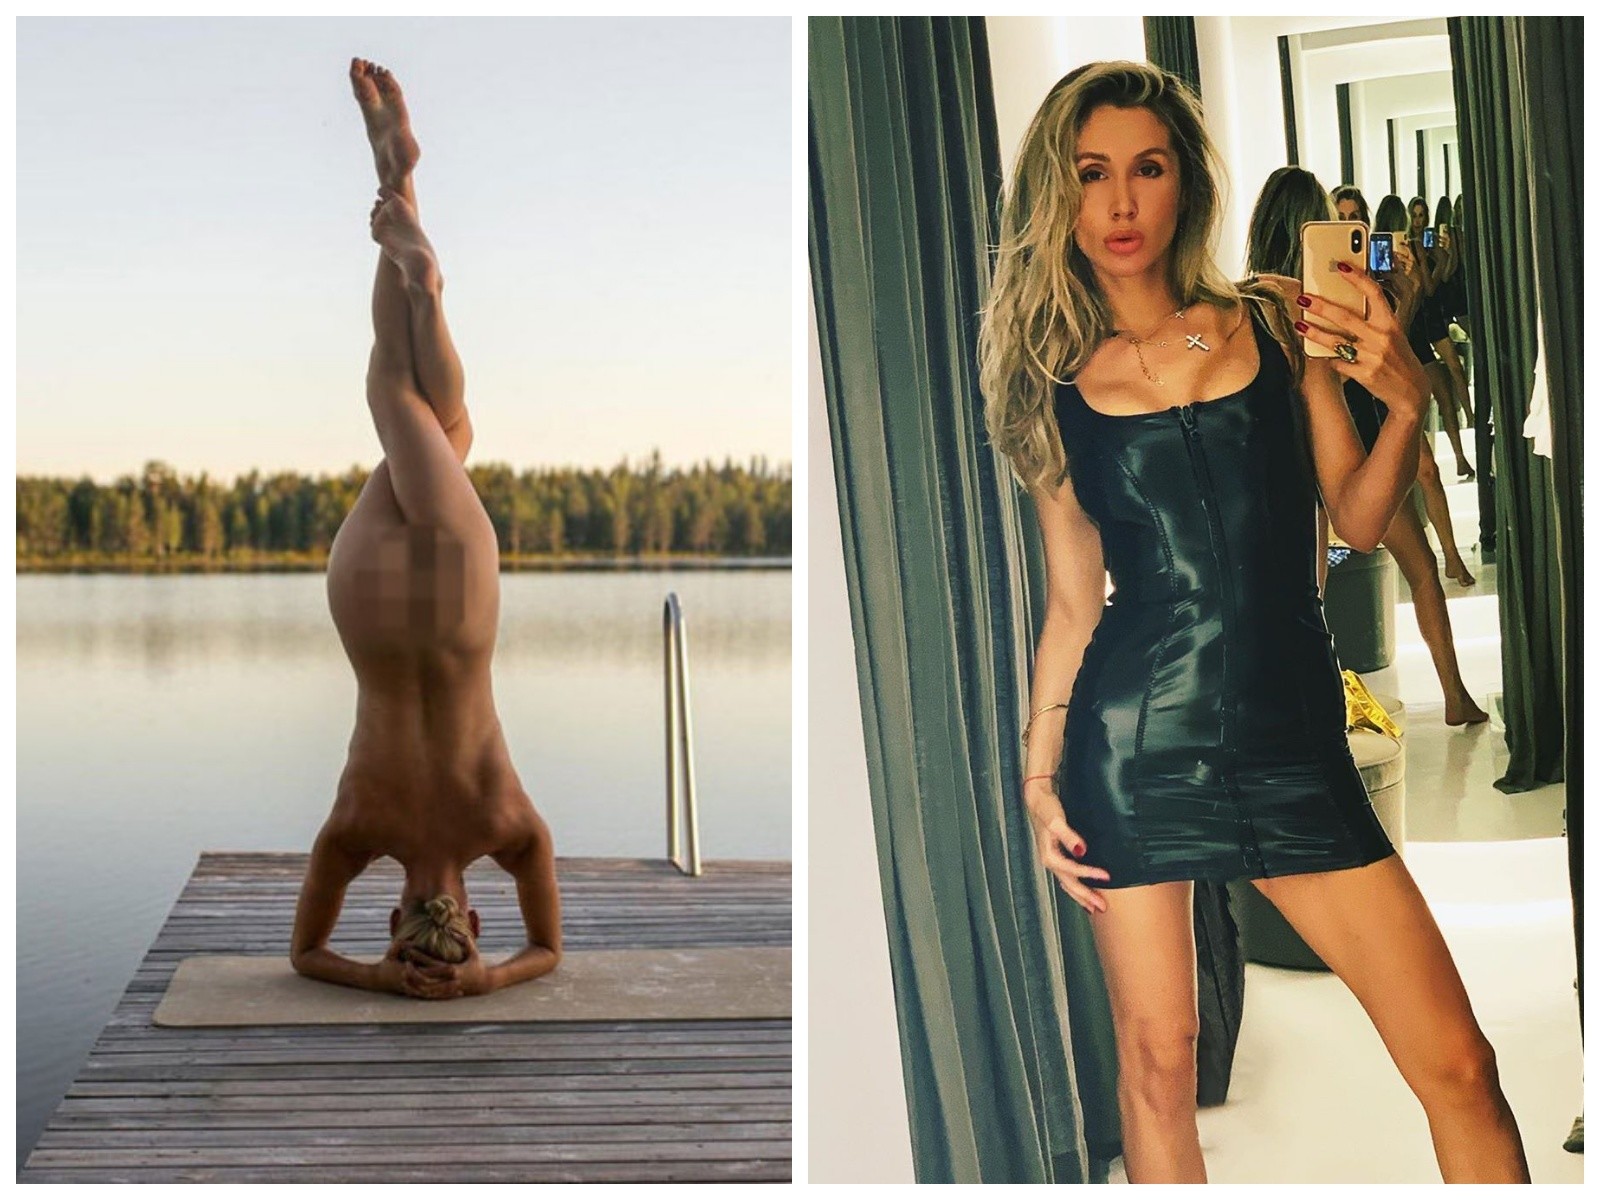 Слева — nude_yogagirl, справа — Светлана Лобода. Фото © Instagram / nude_yogagirl, lobodaofficial